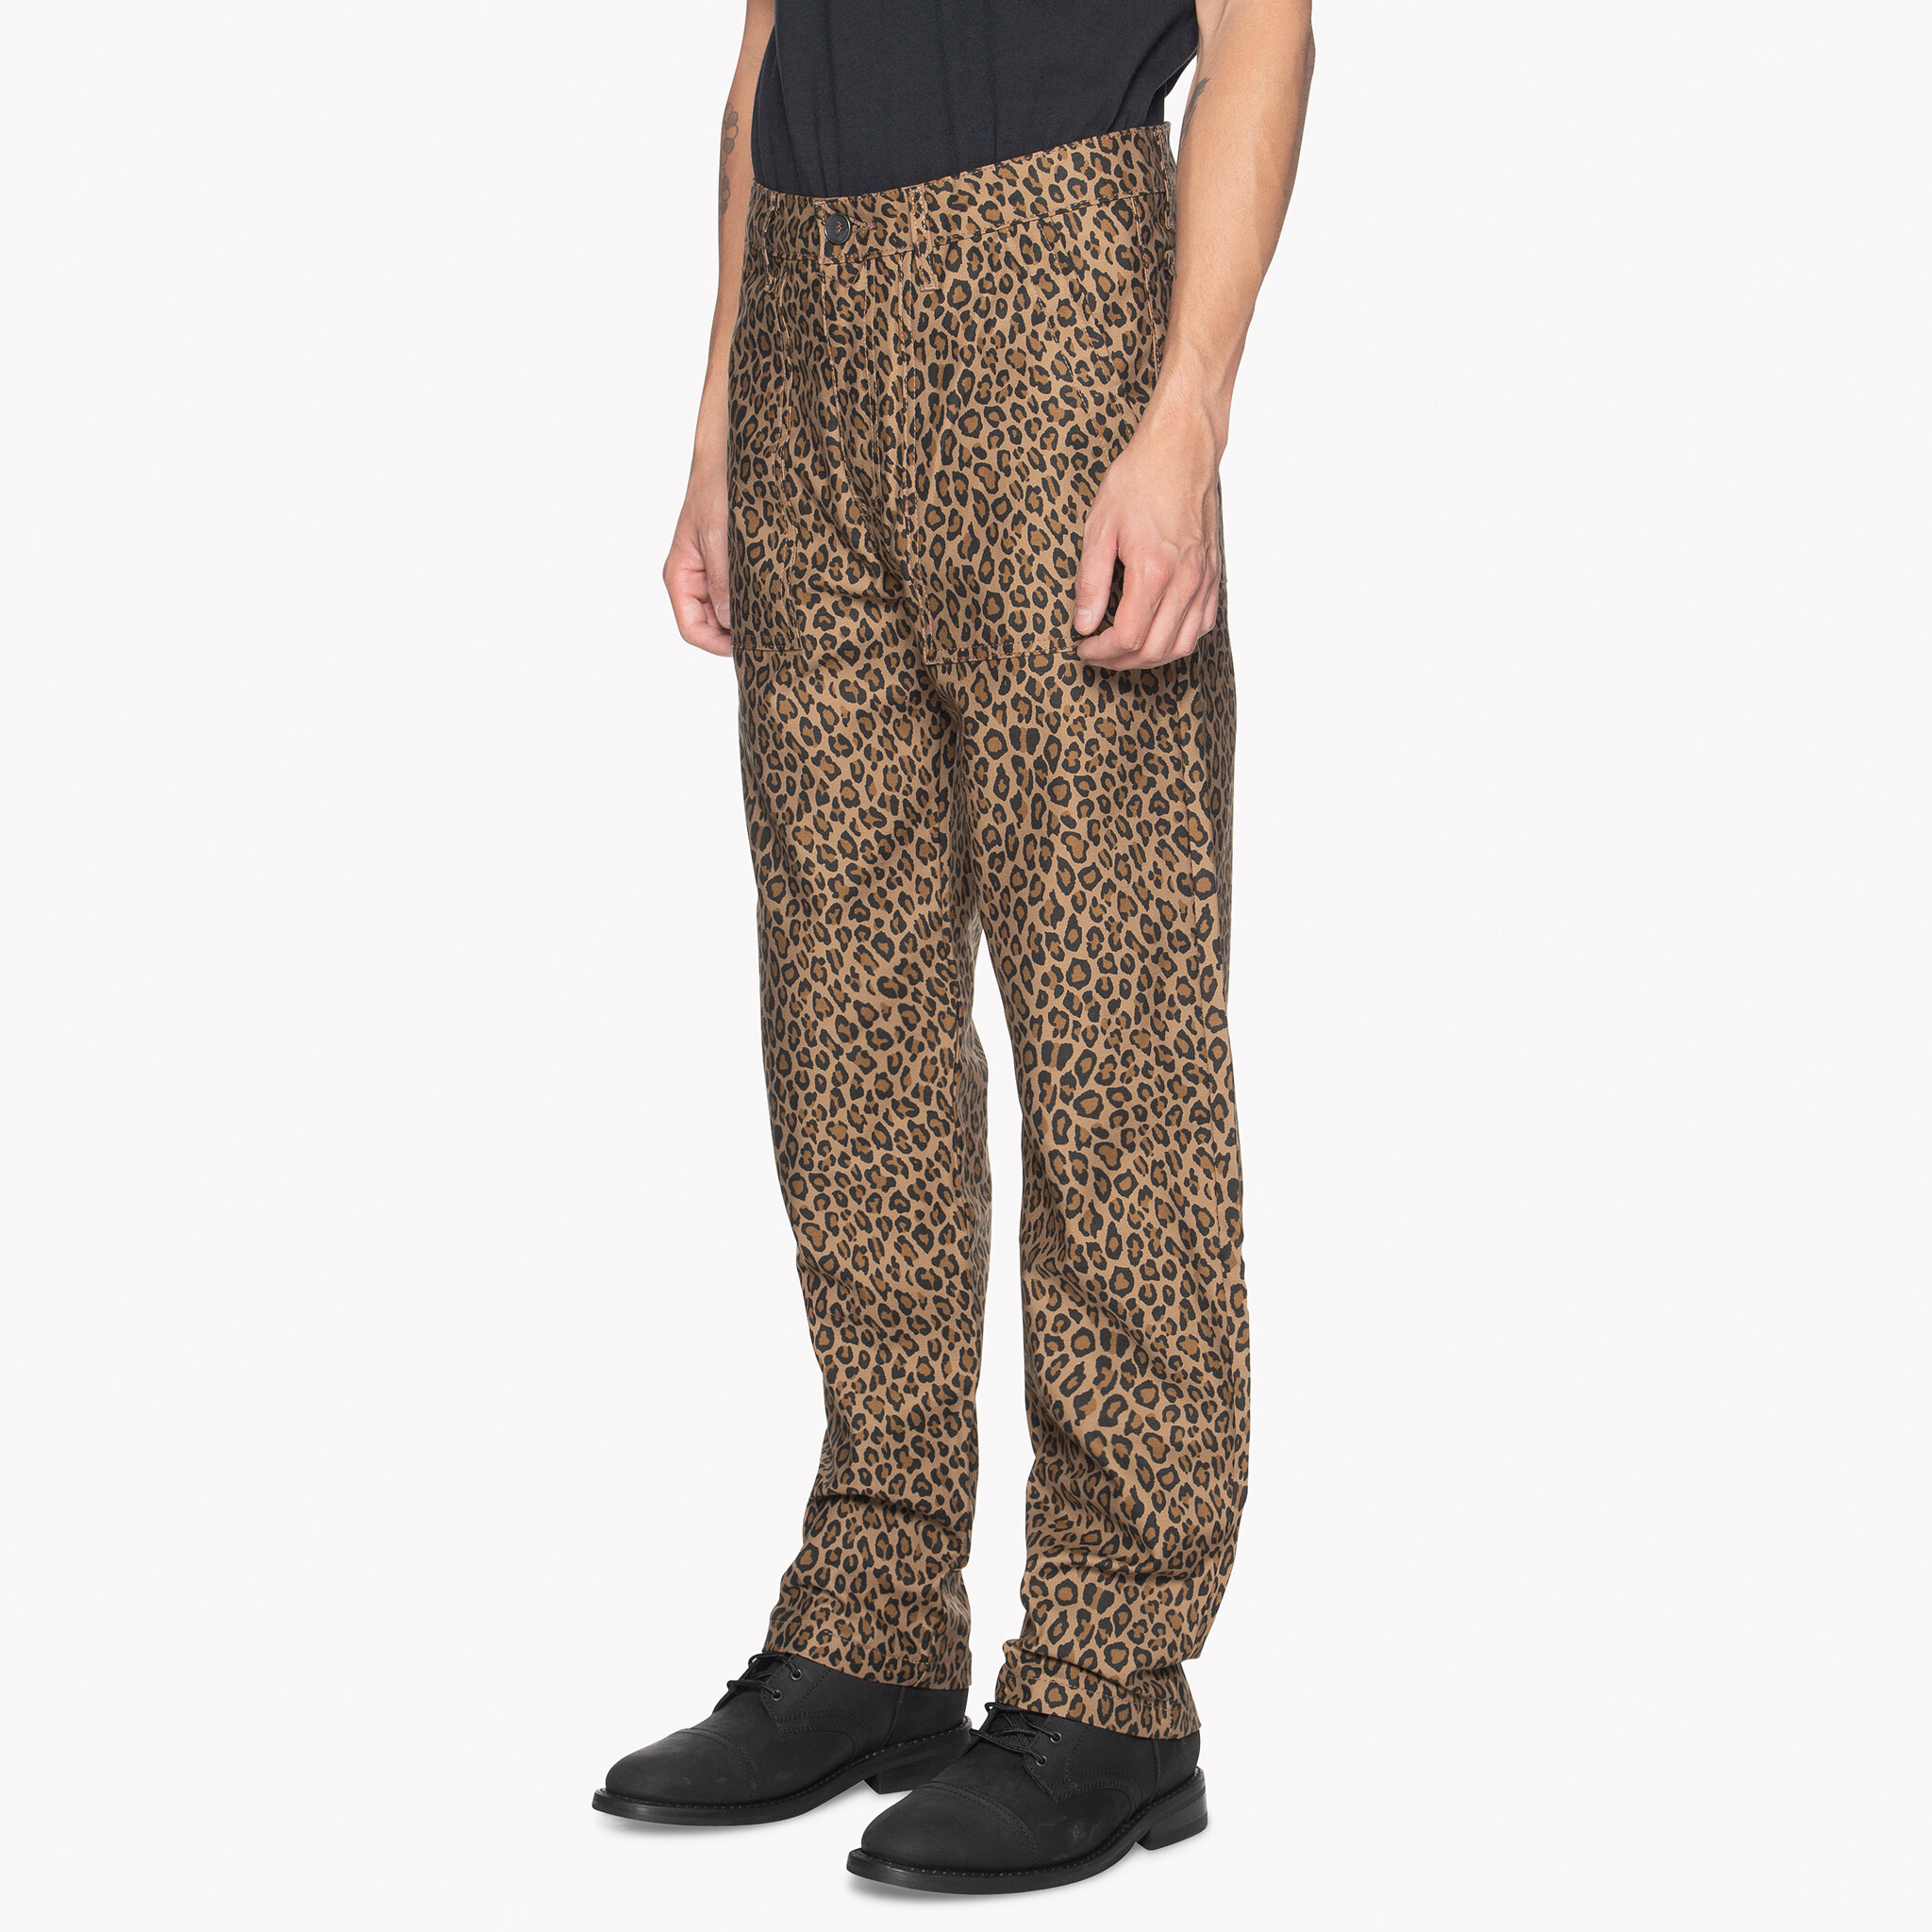 Work Pant - Leopard Print | Naked & Famous Denim